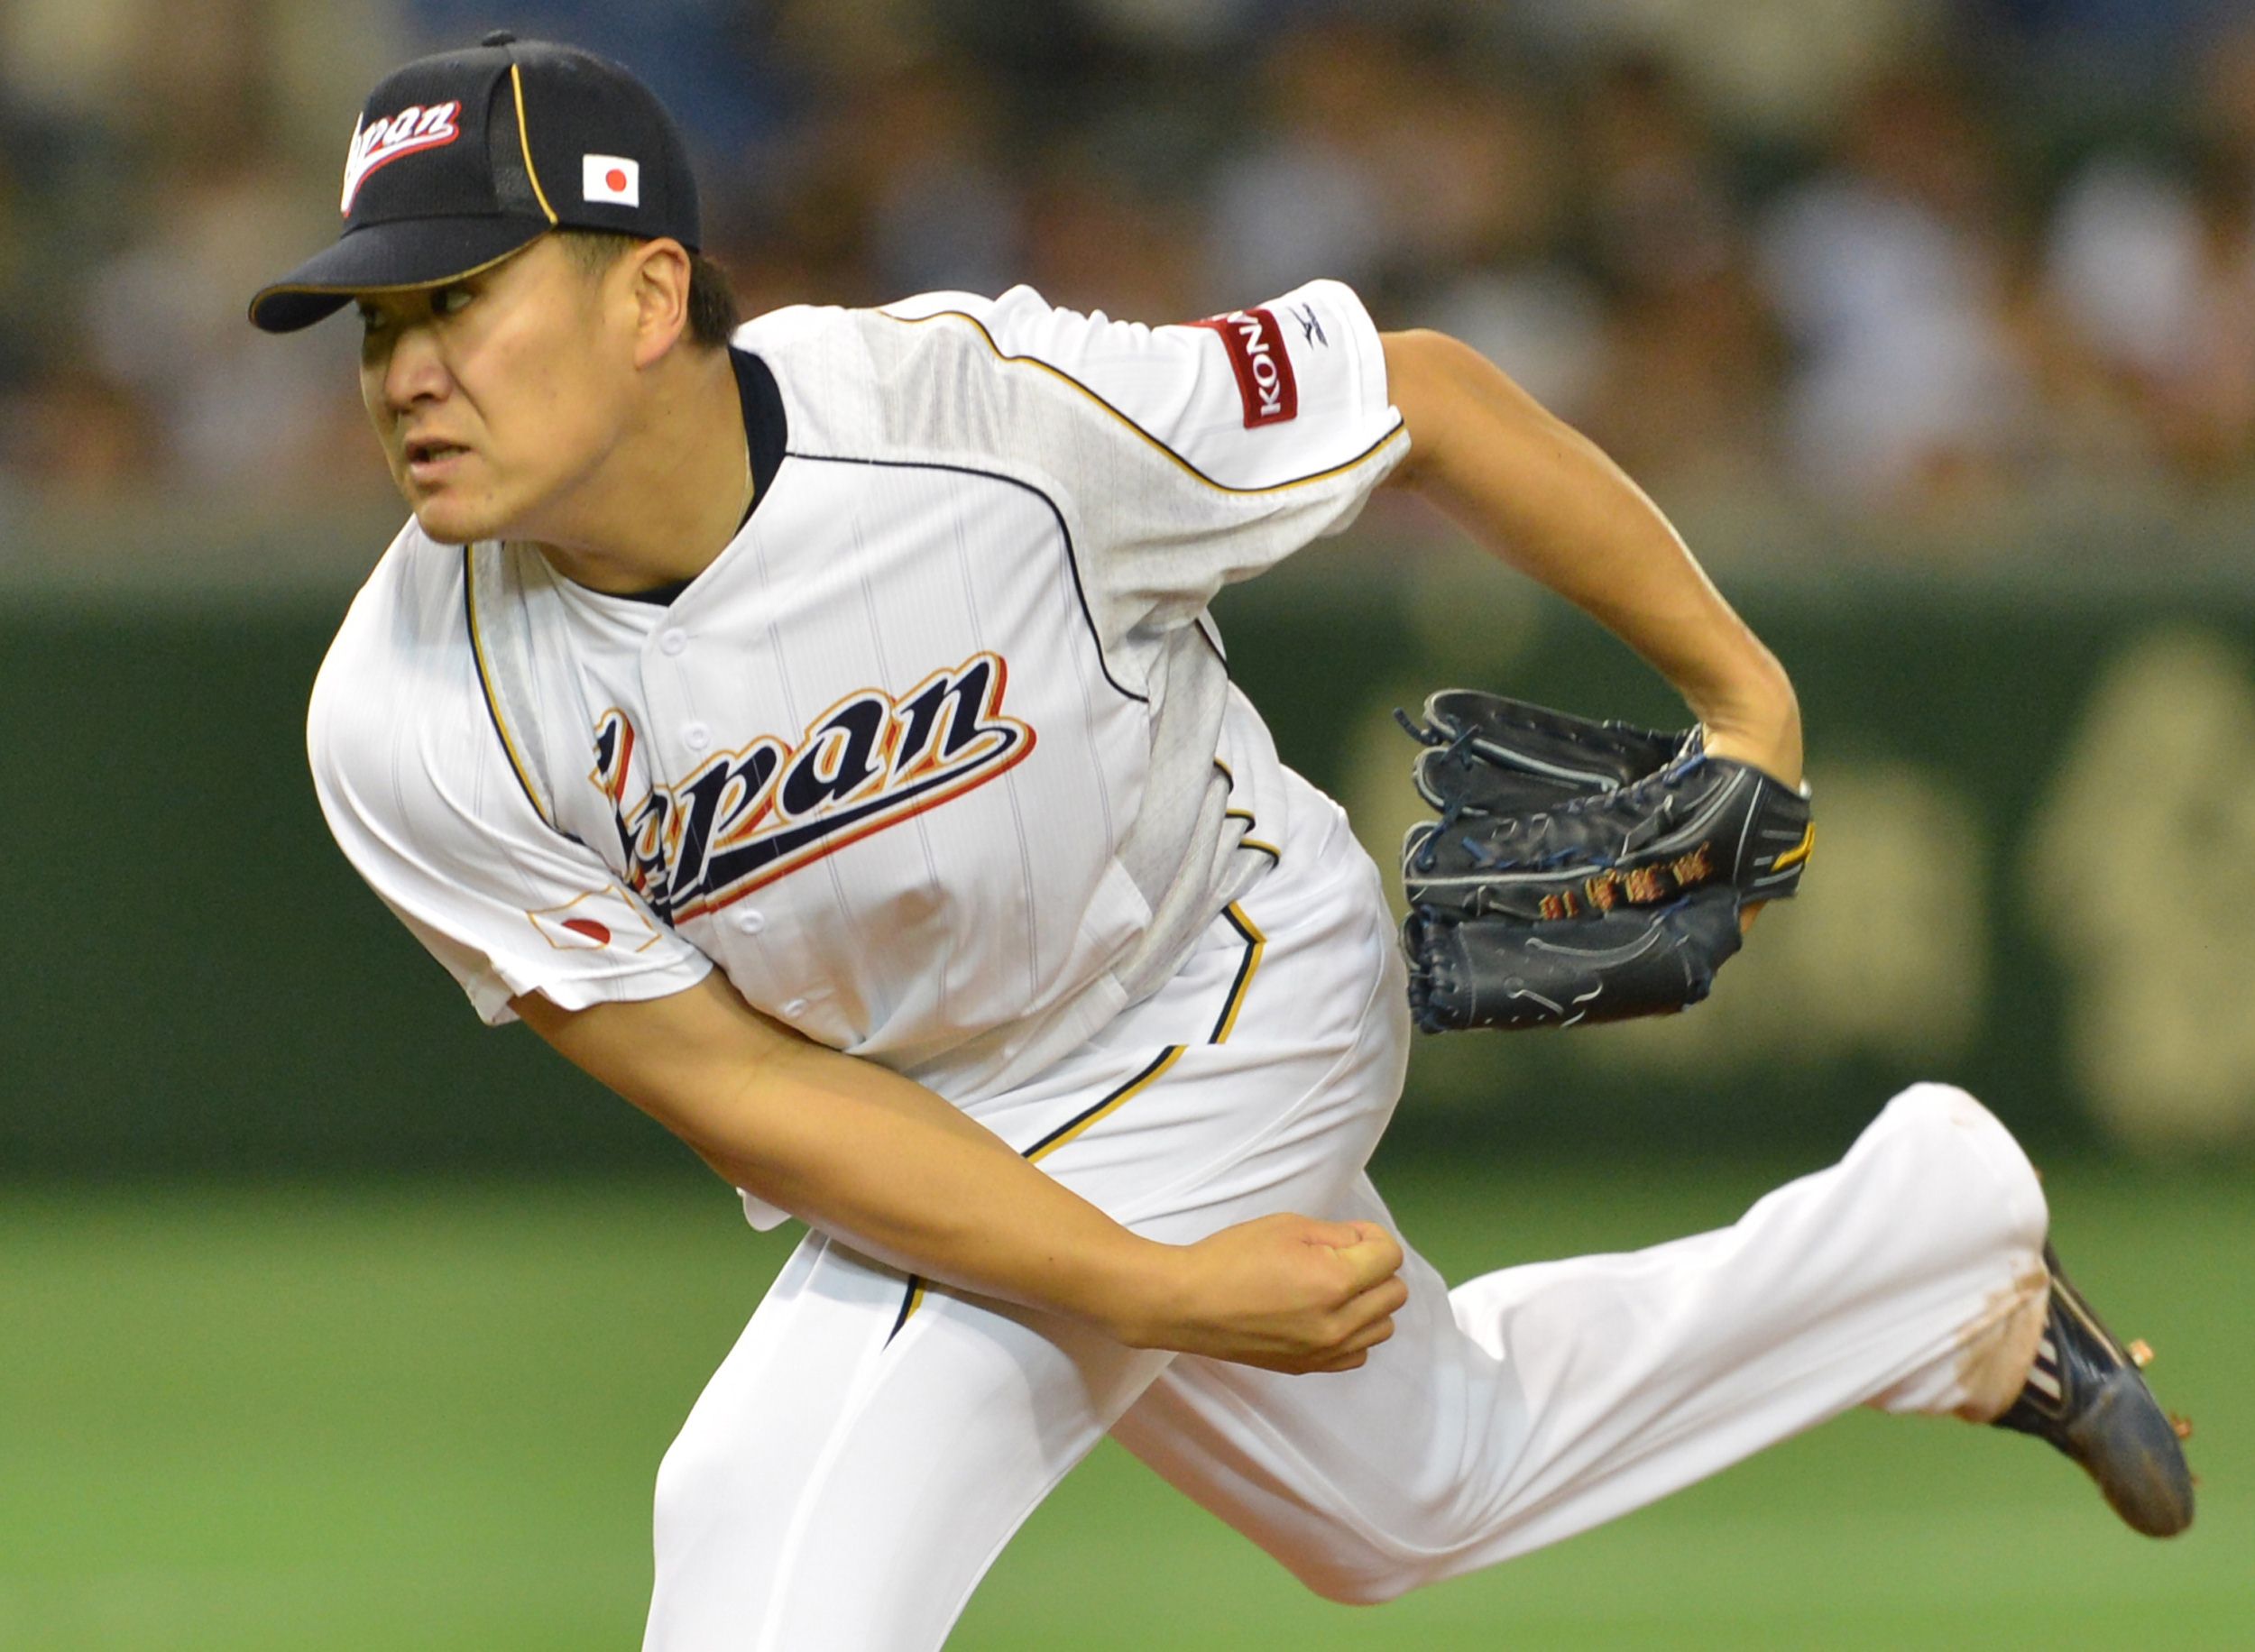 New York Yankees snare Japanese pitcher Masahiro Tanaka in US$155m deal